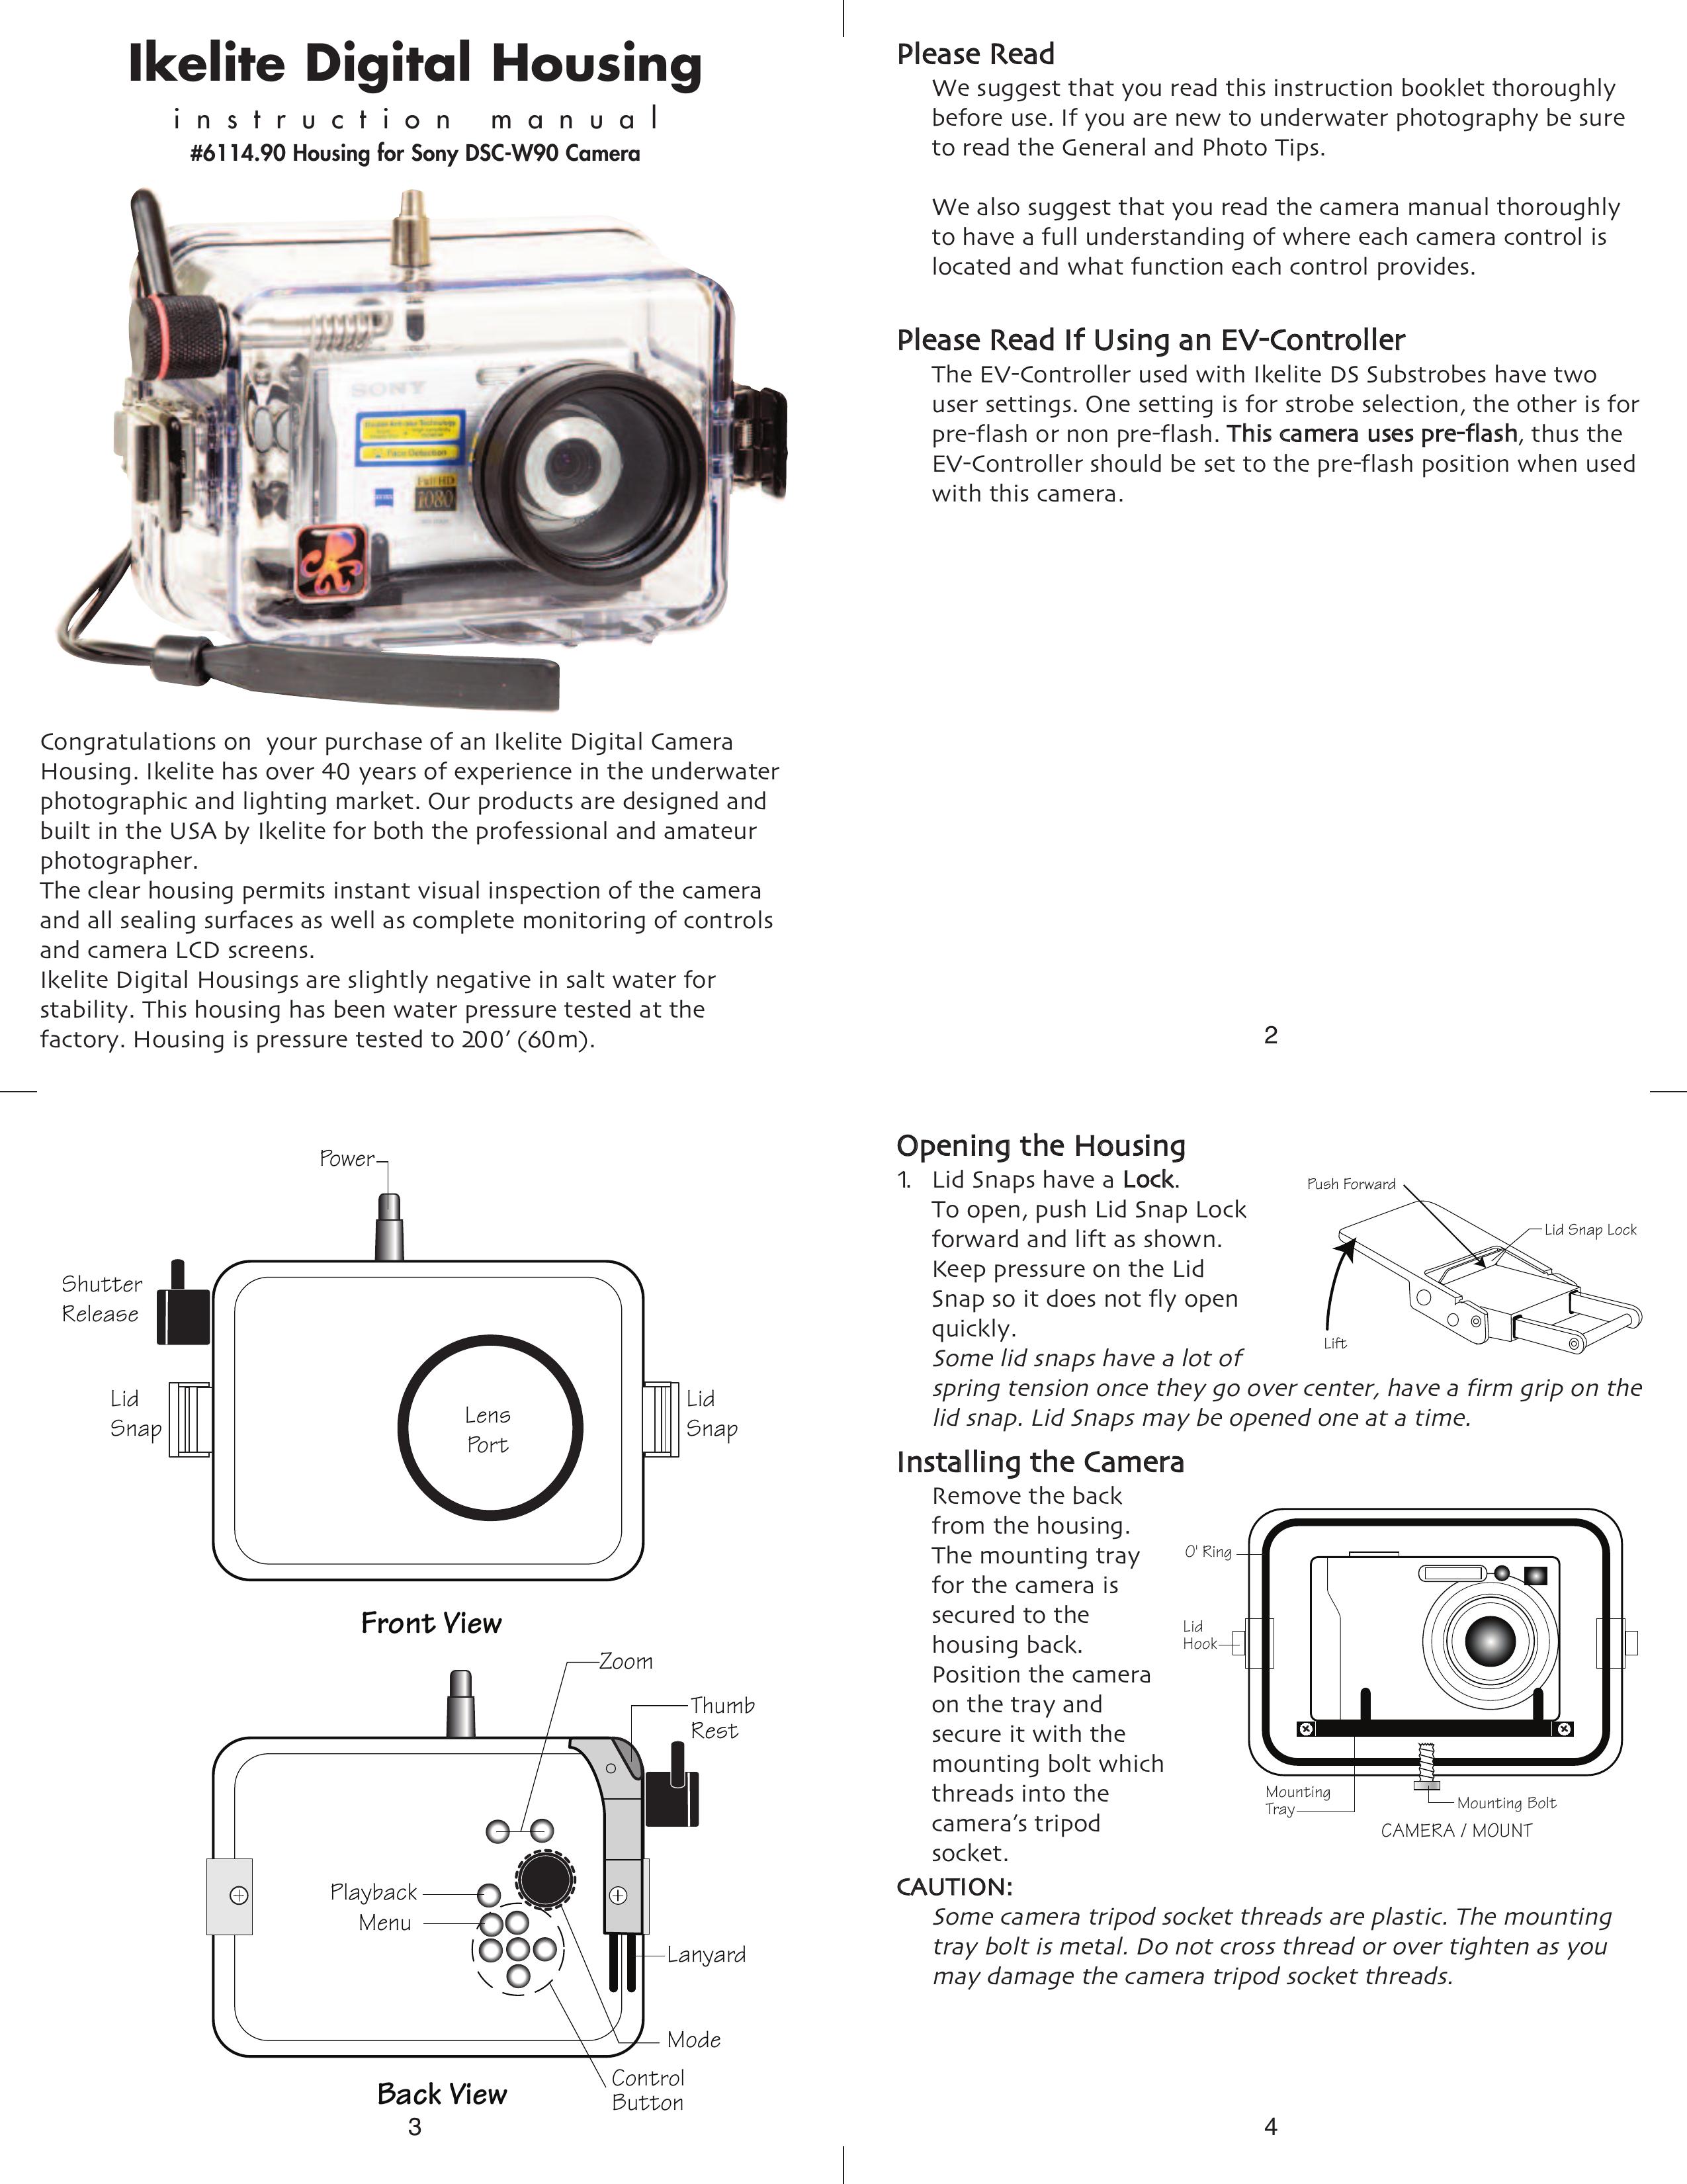 Ikelite DSC-W90 Digital Camera User Manual